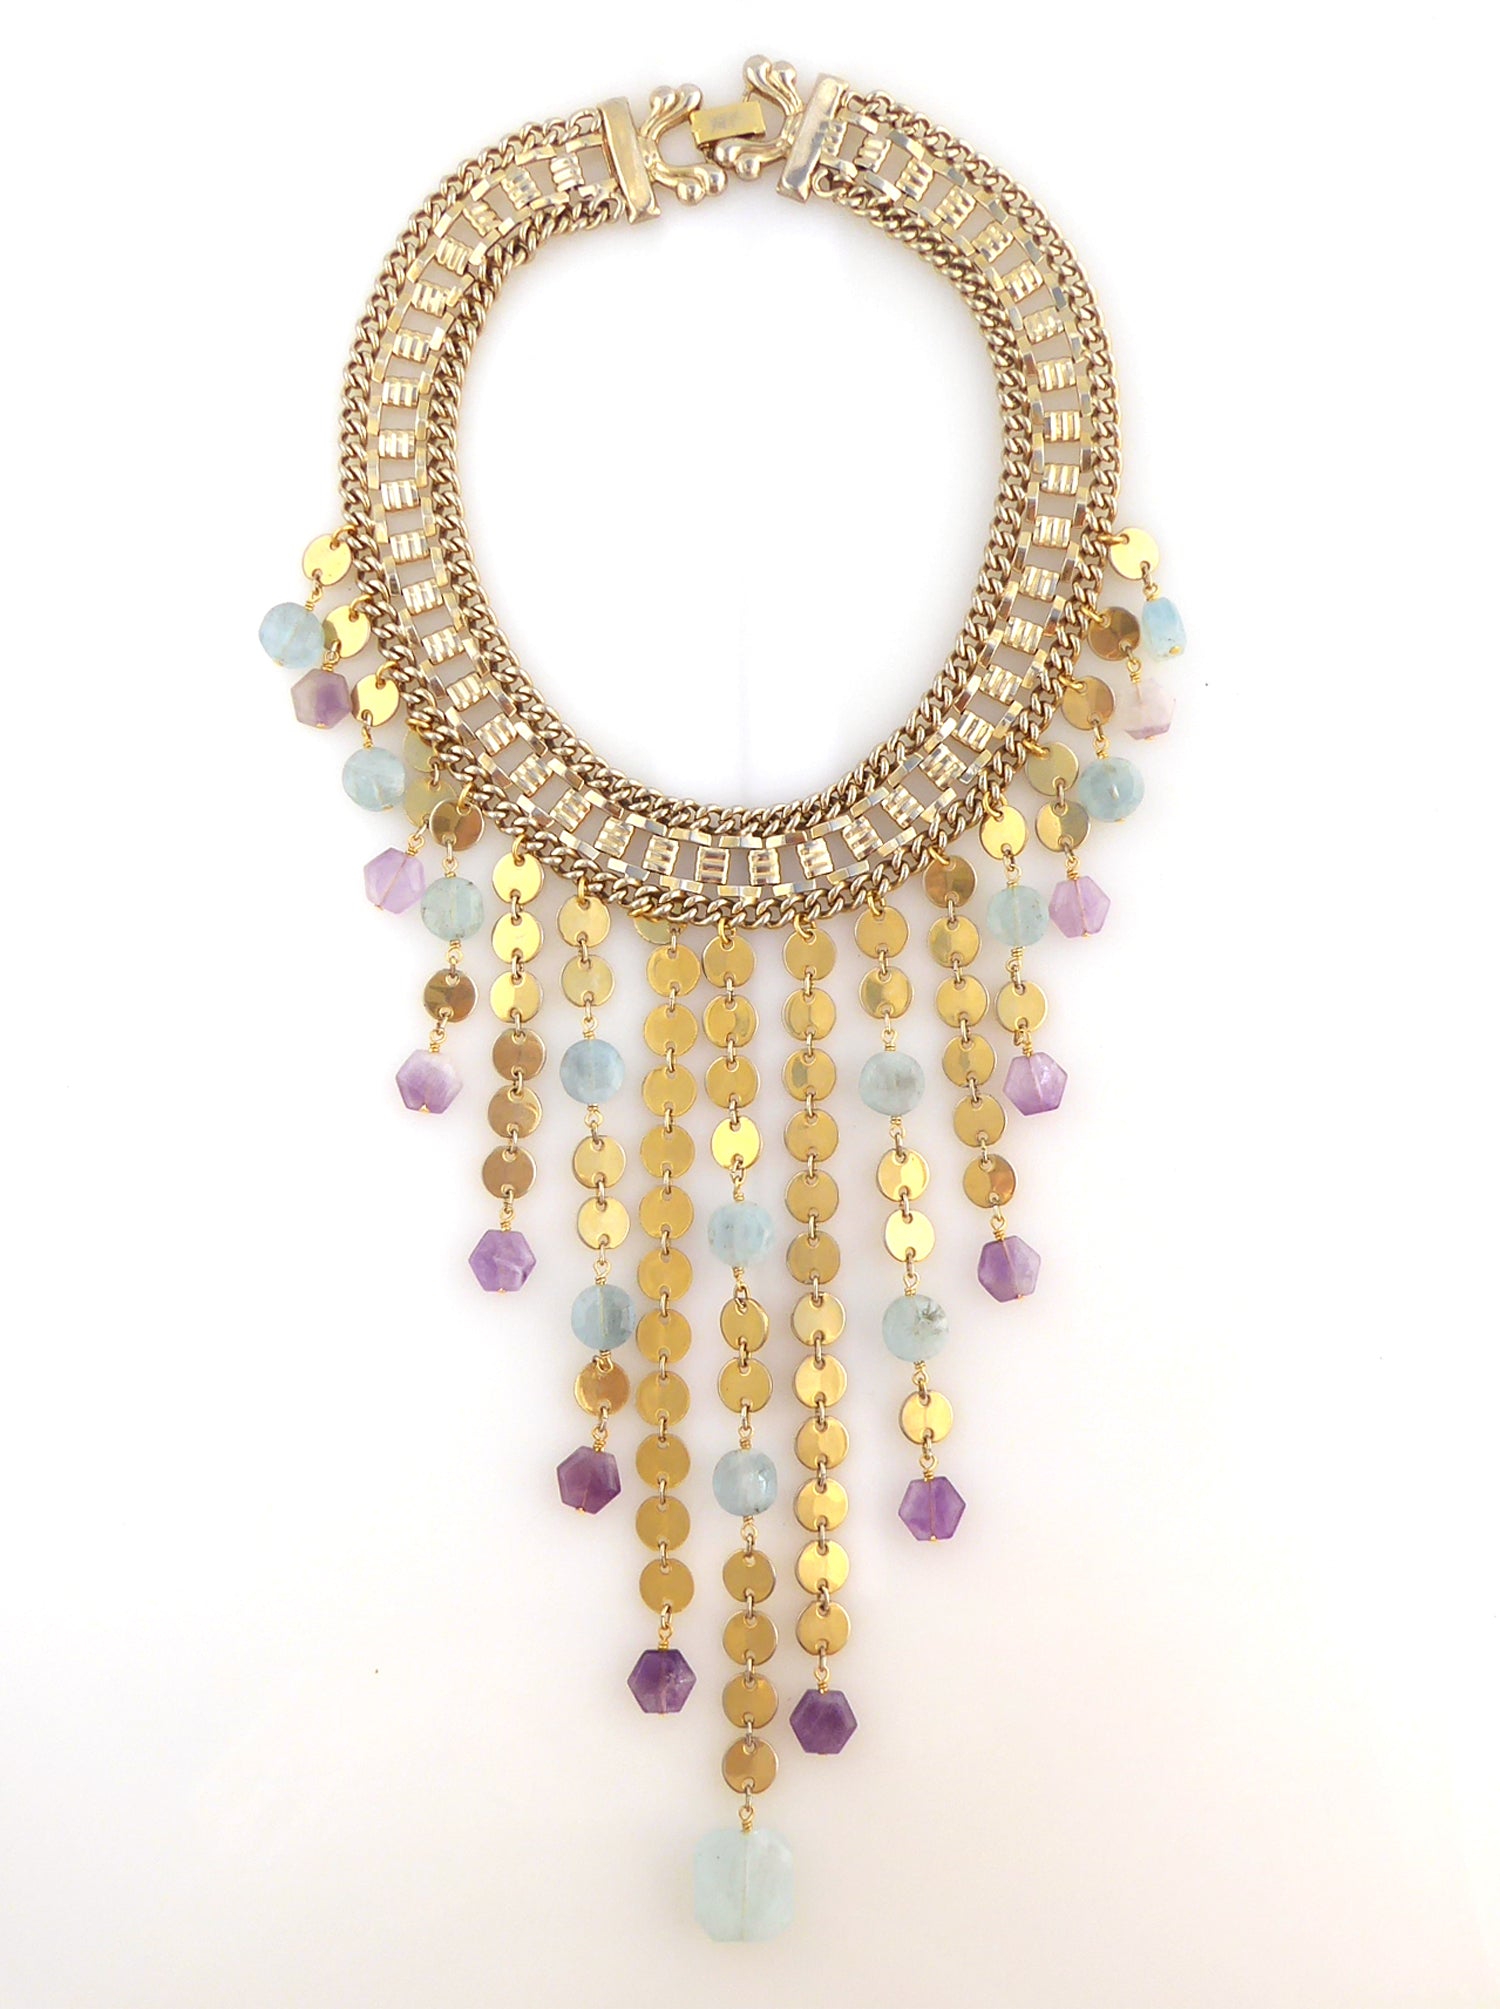 Carmeline aquamarine and amethyst necklace by Jenny Dayco 7